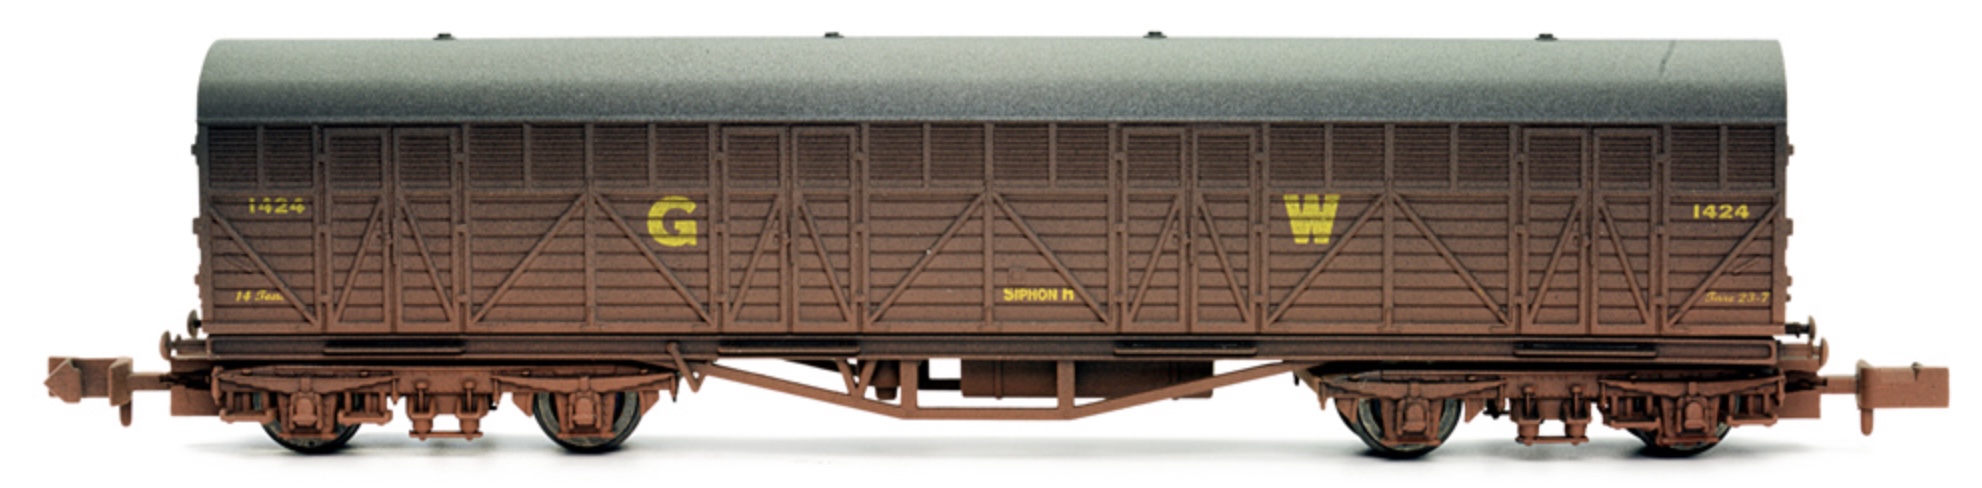 N Scale - Dapol - 2F-023-014 - Siphon Wagon, Wood, H-Series - Great Western - 1432